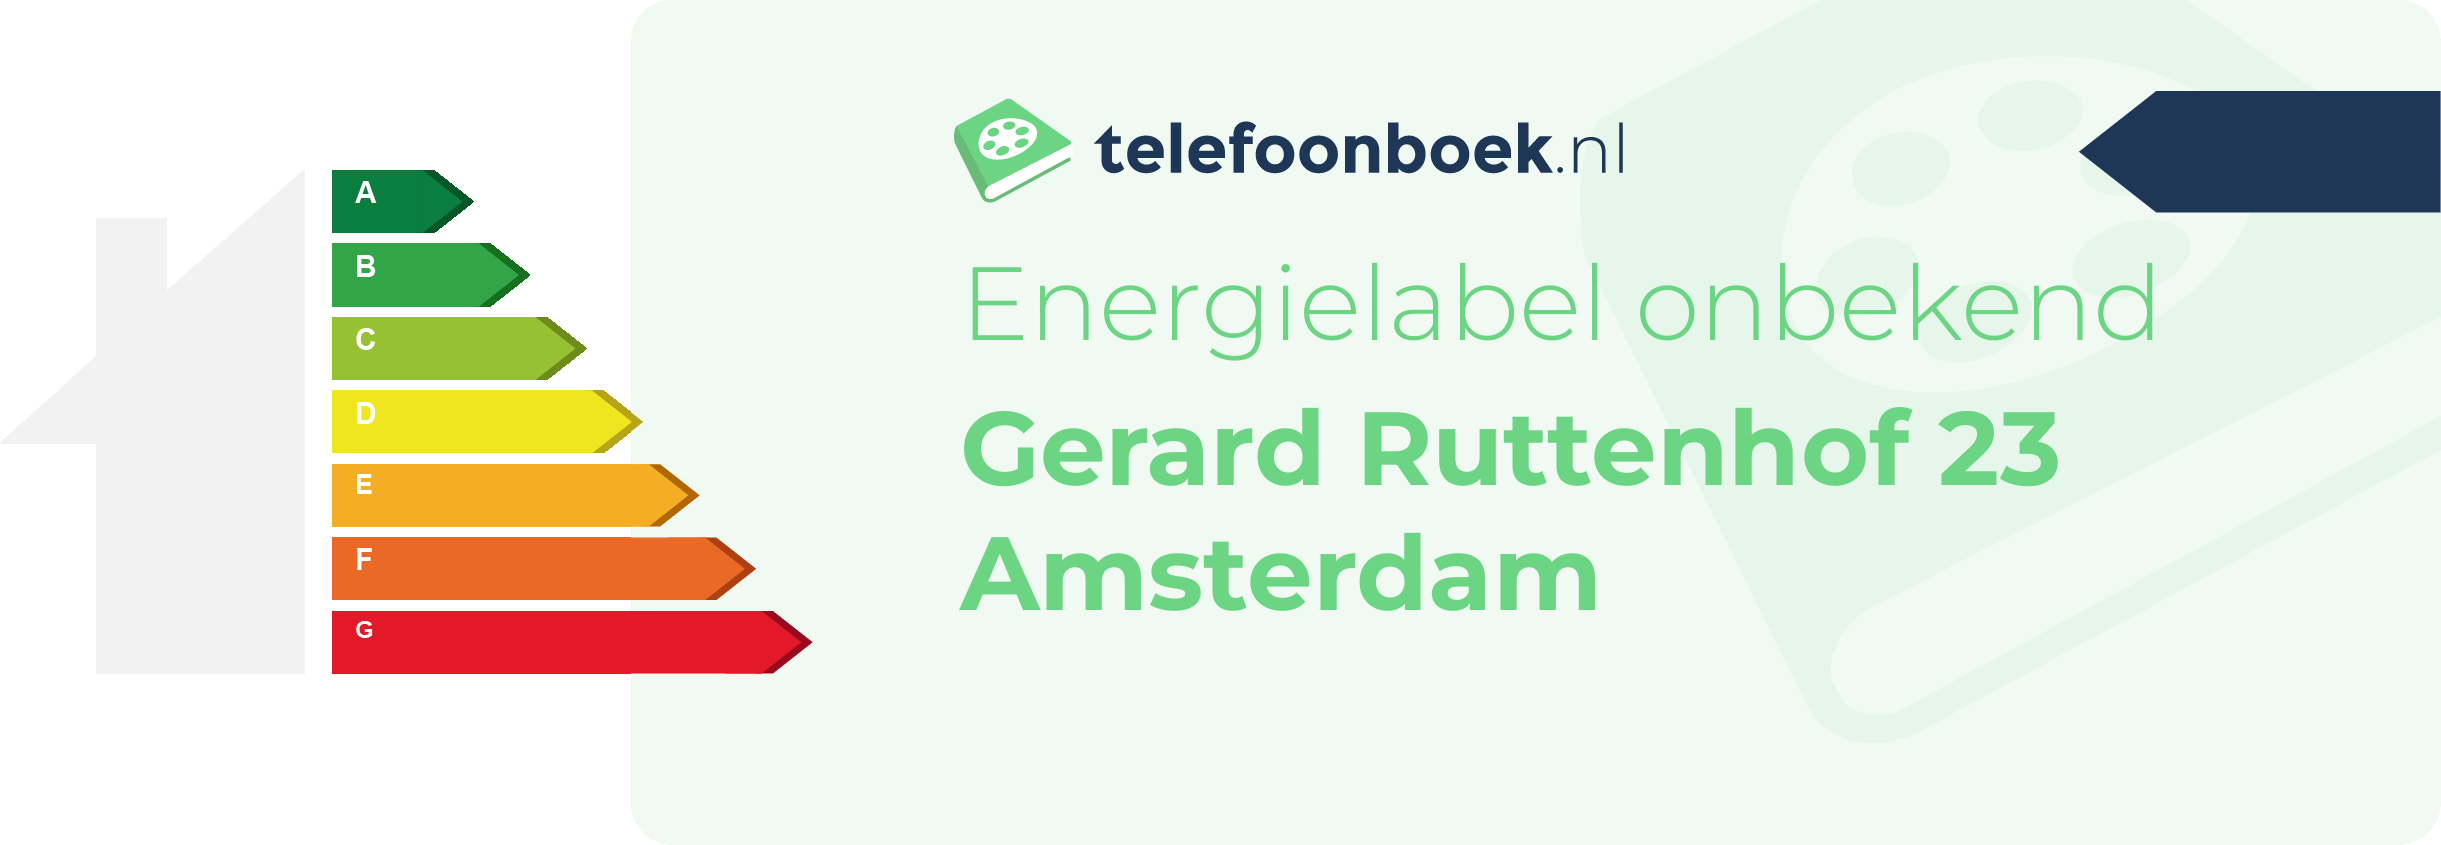 Energielabel Gerard Ruttenhof 23 Amsterdam